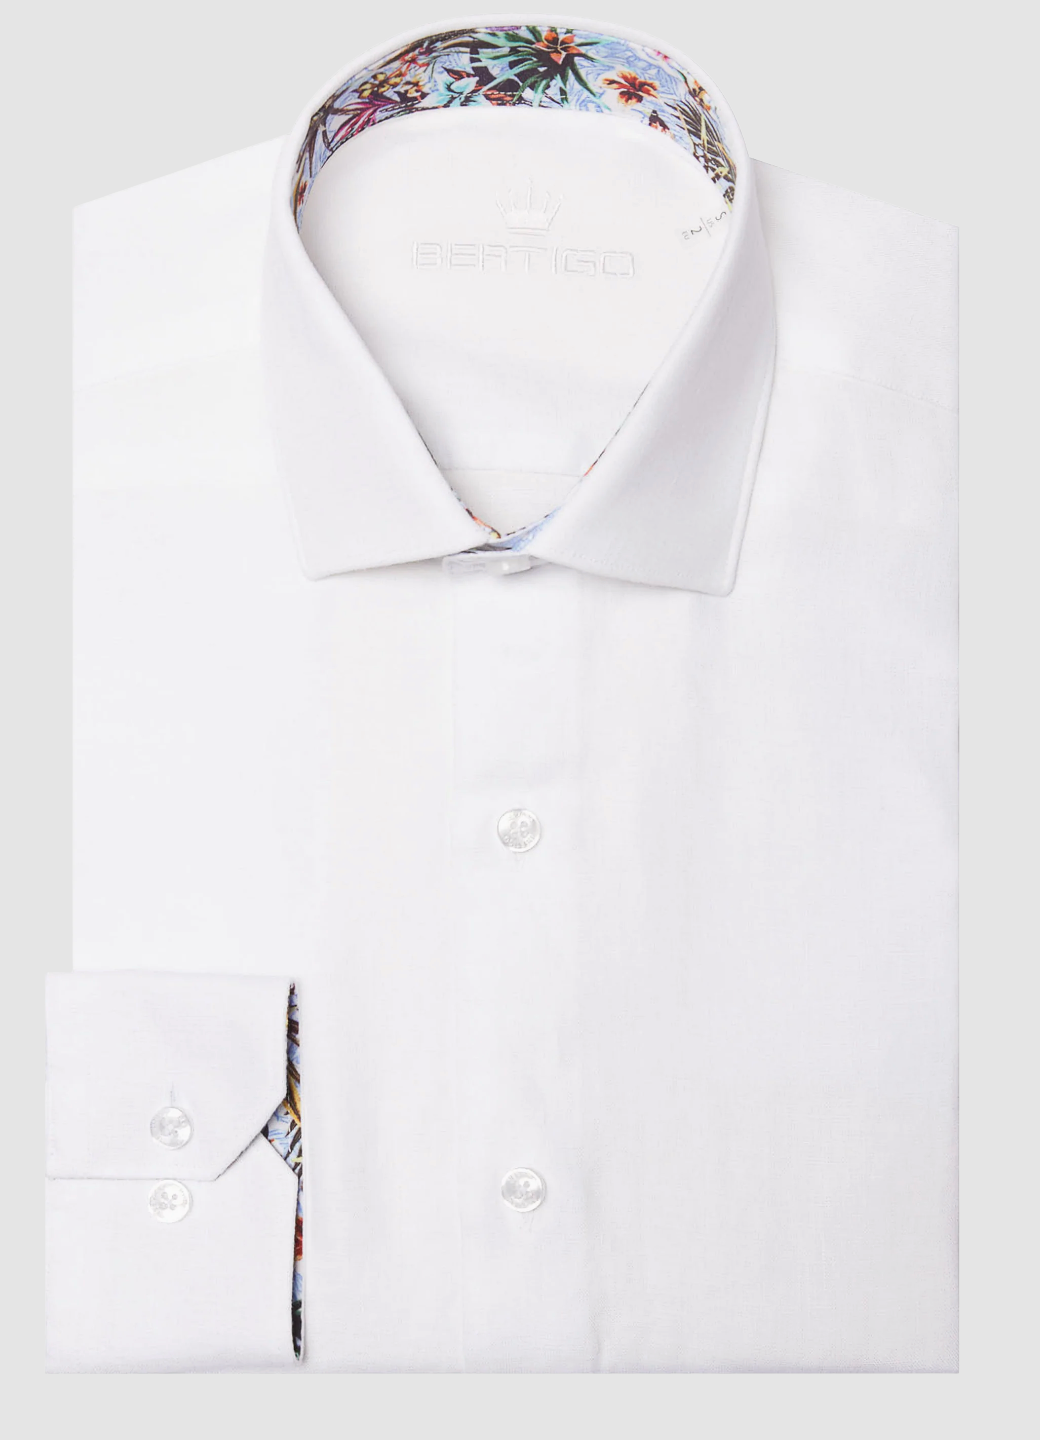 BERTIGO White Linen Shirt